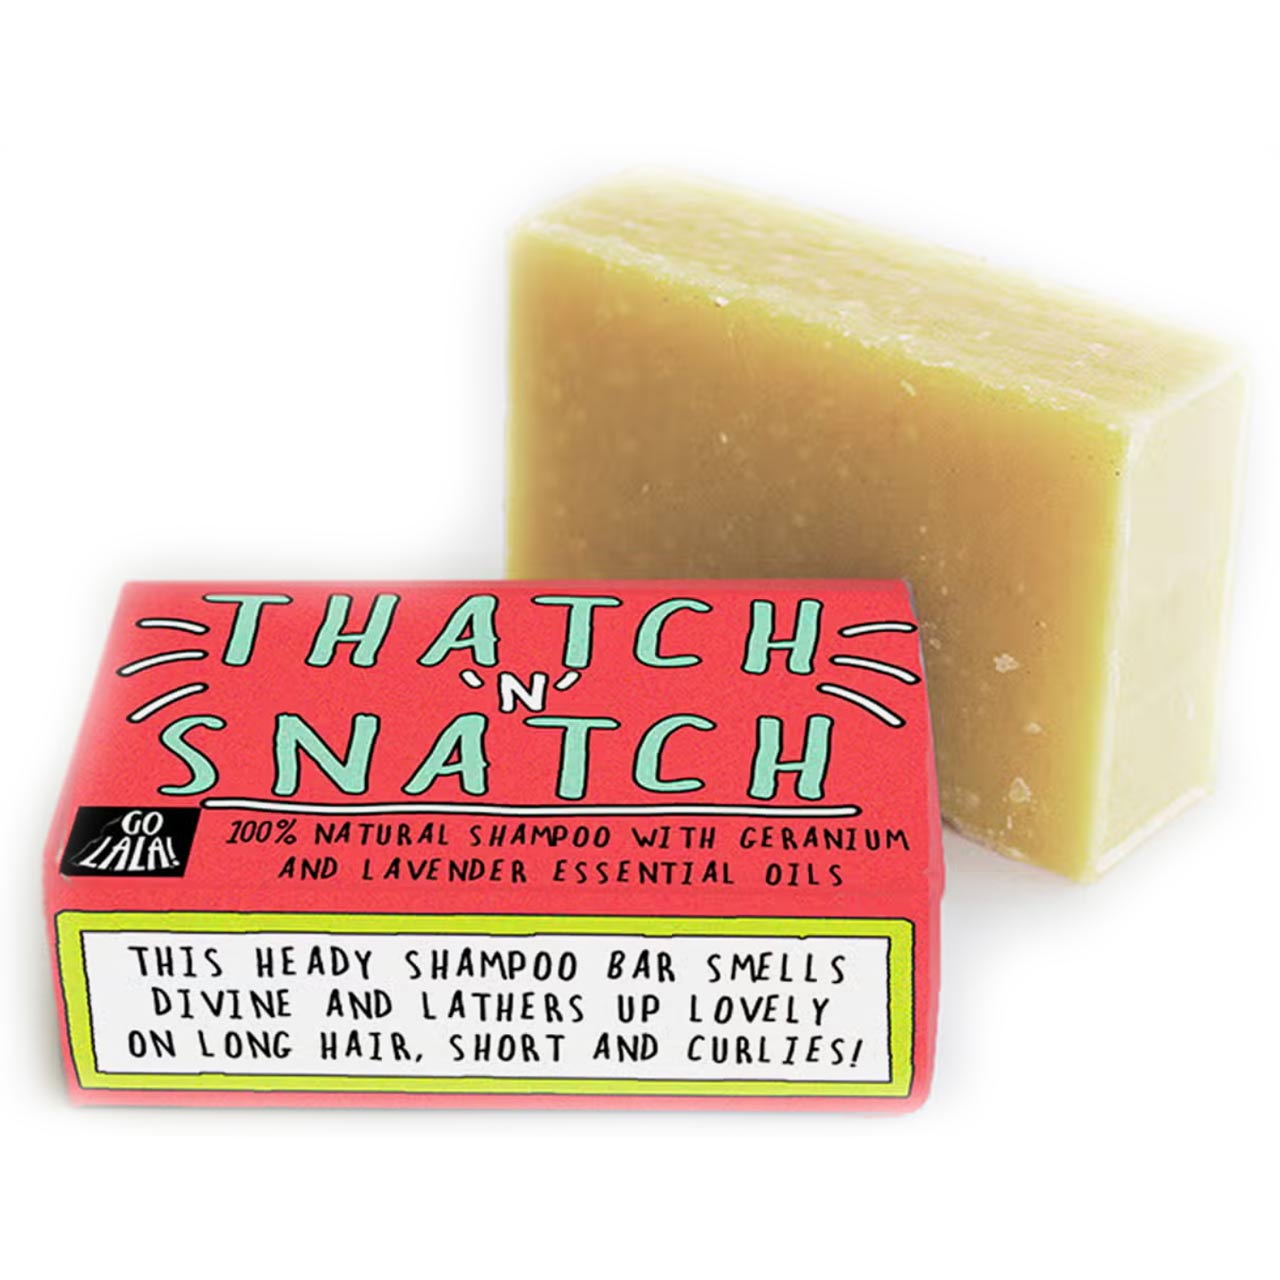 Thatch 'n' Snatch Natural Shampoo Bar